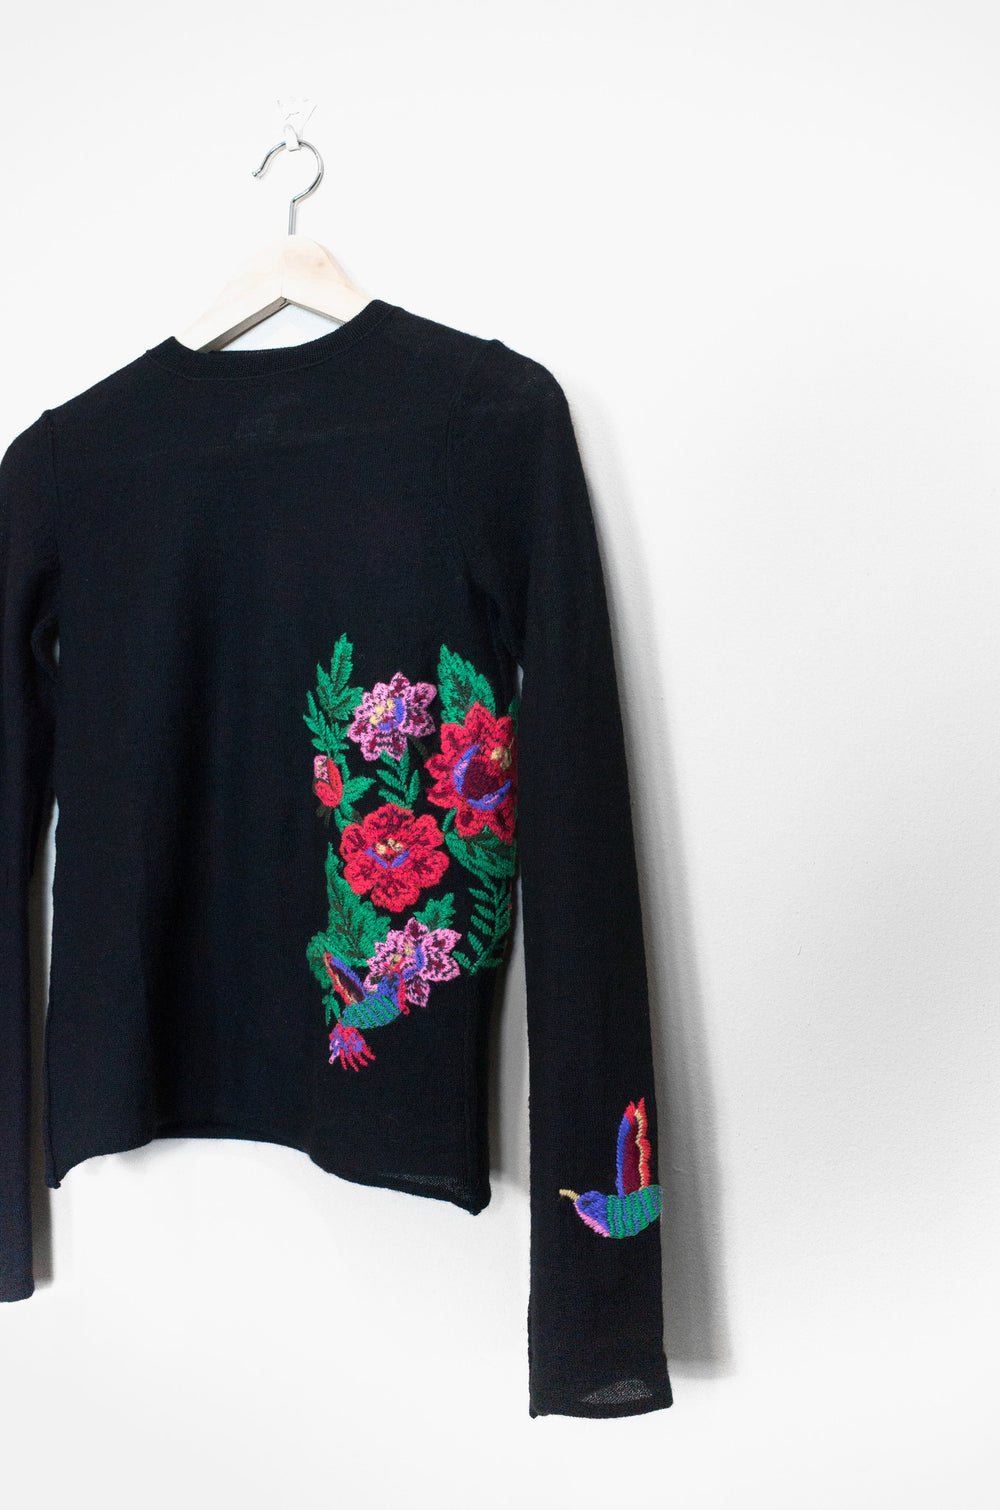 Yohji Yamamoto Y's Floral Appliqué Sweater